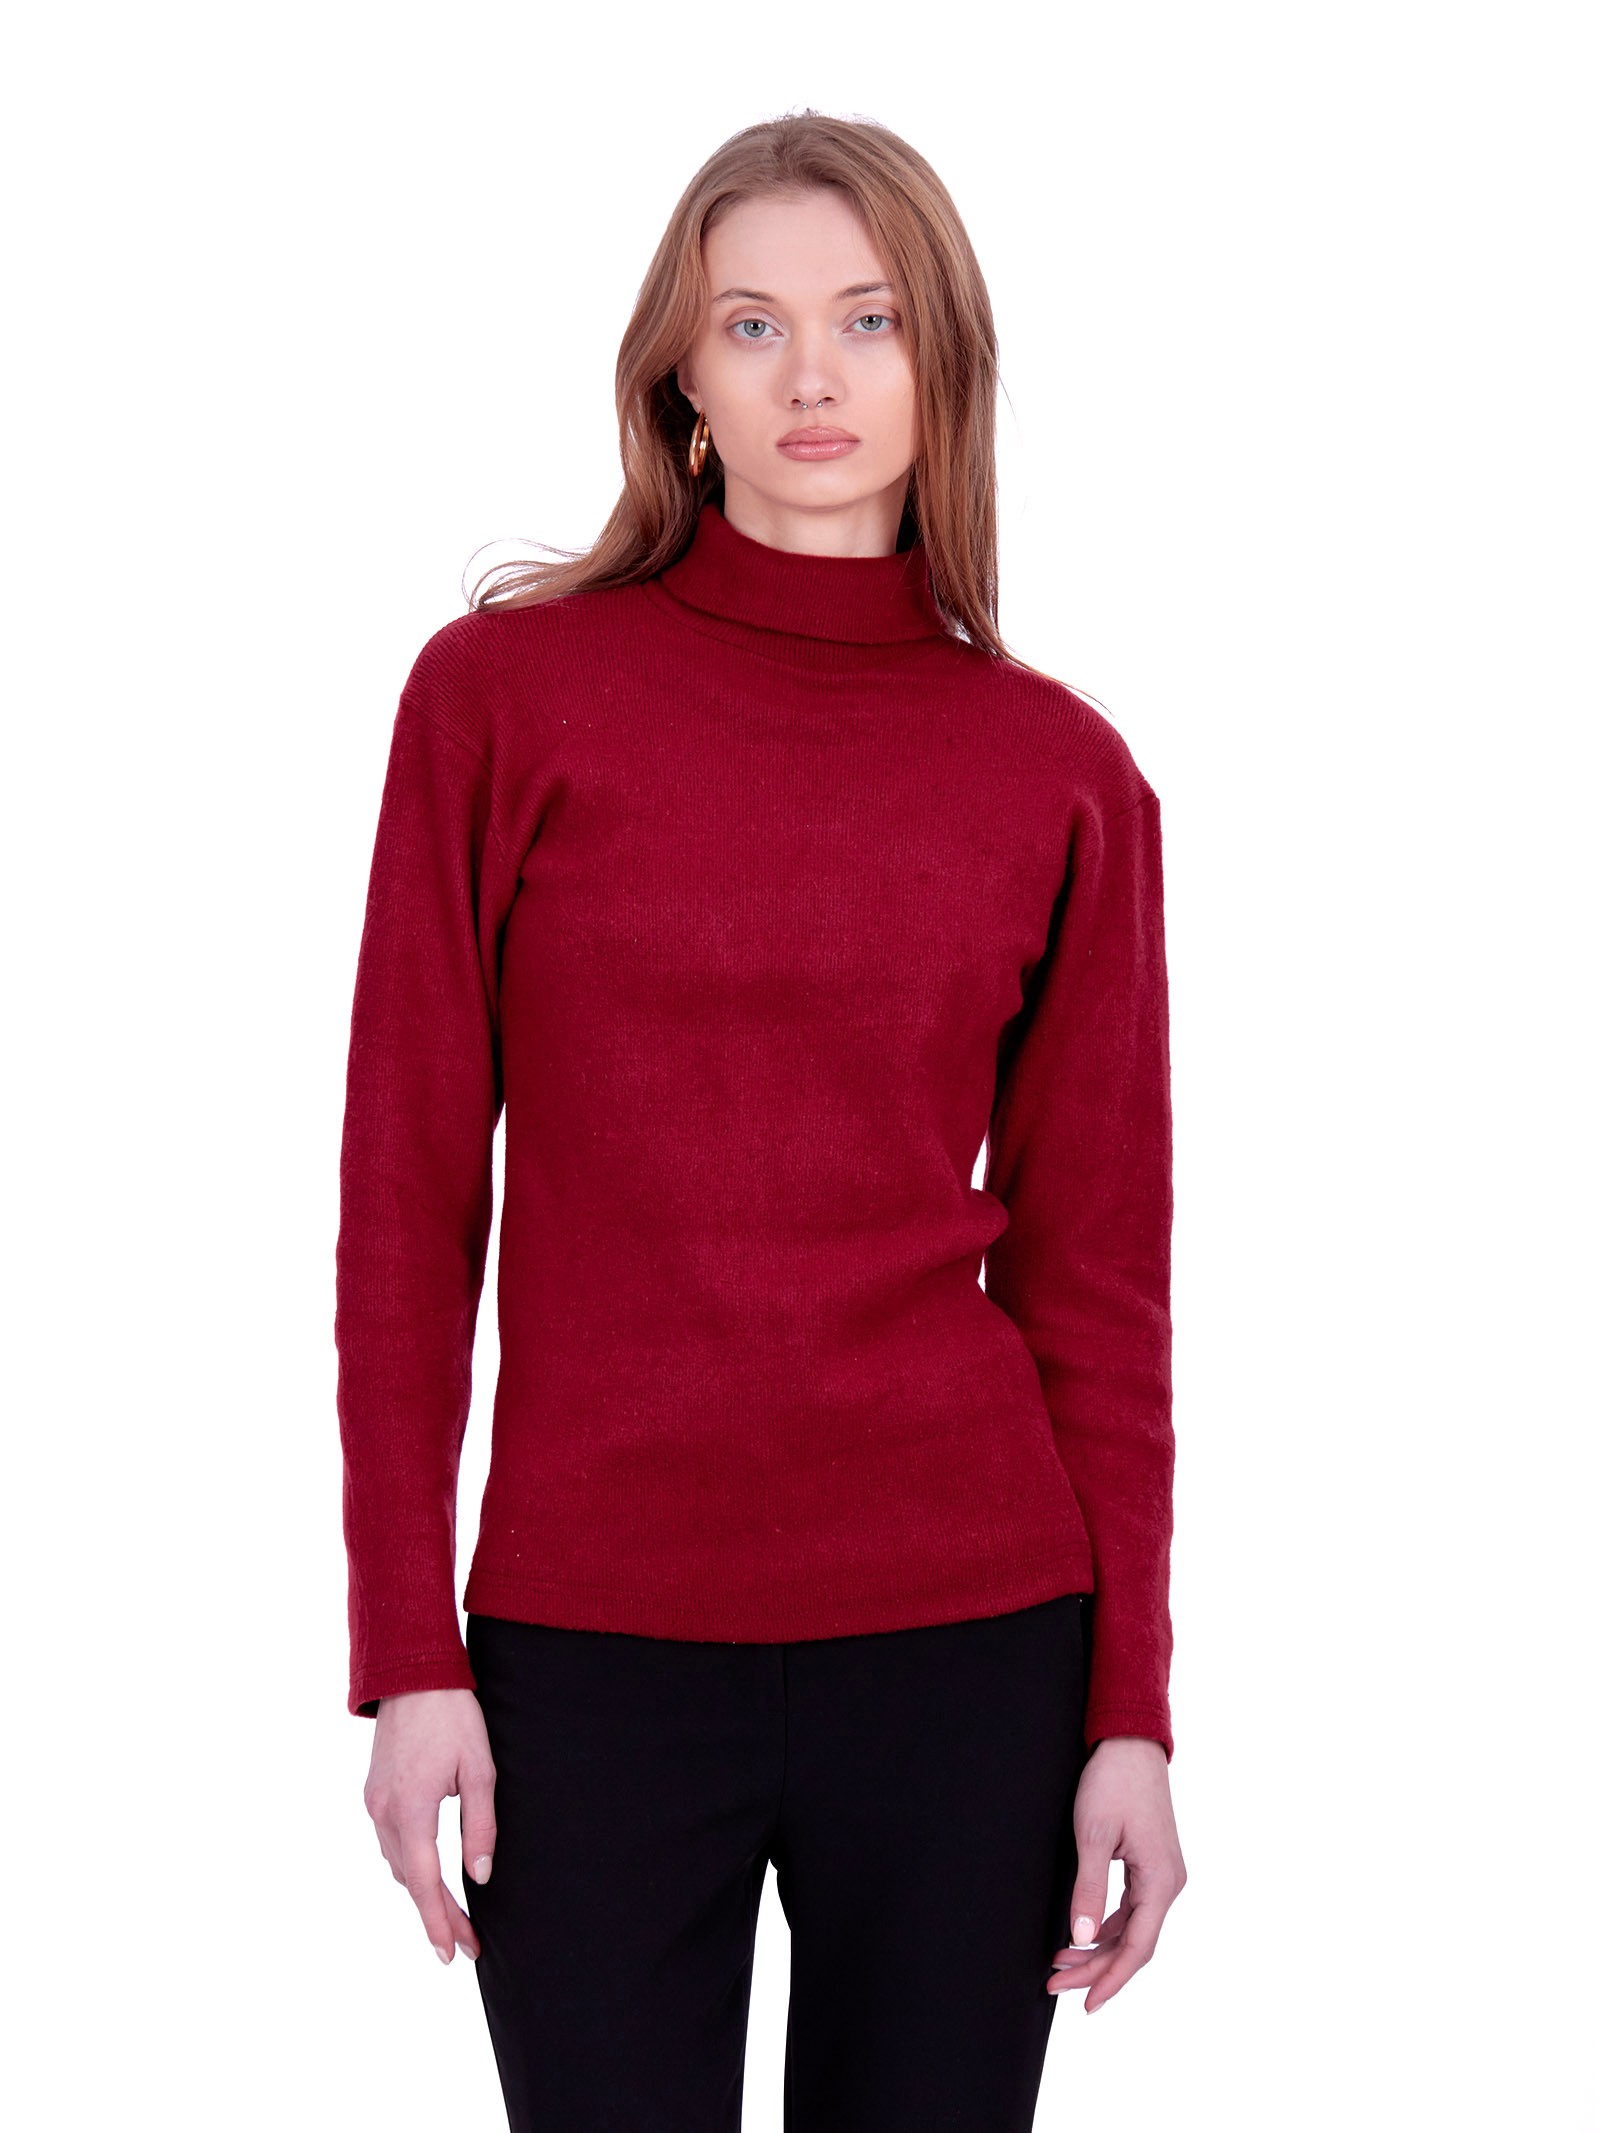 Unisex turtleneck Sweater Burgundy